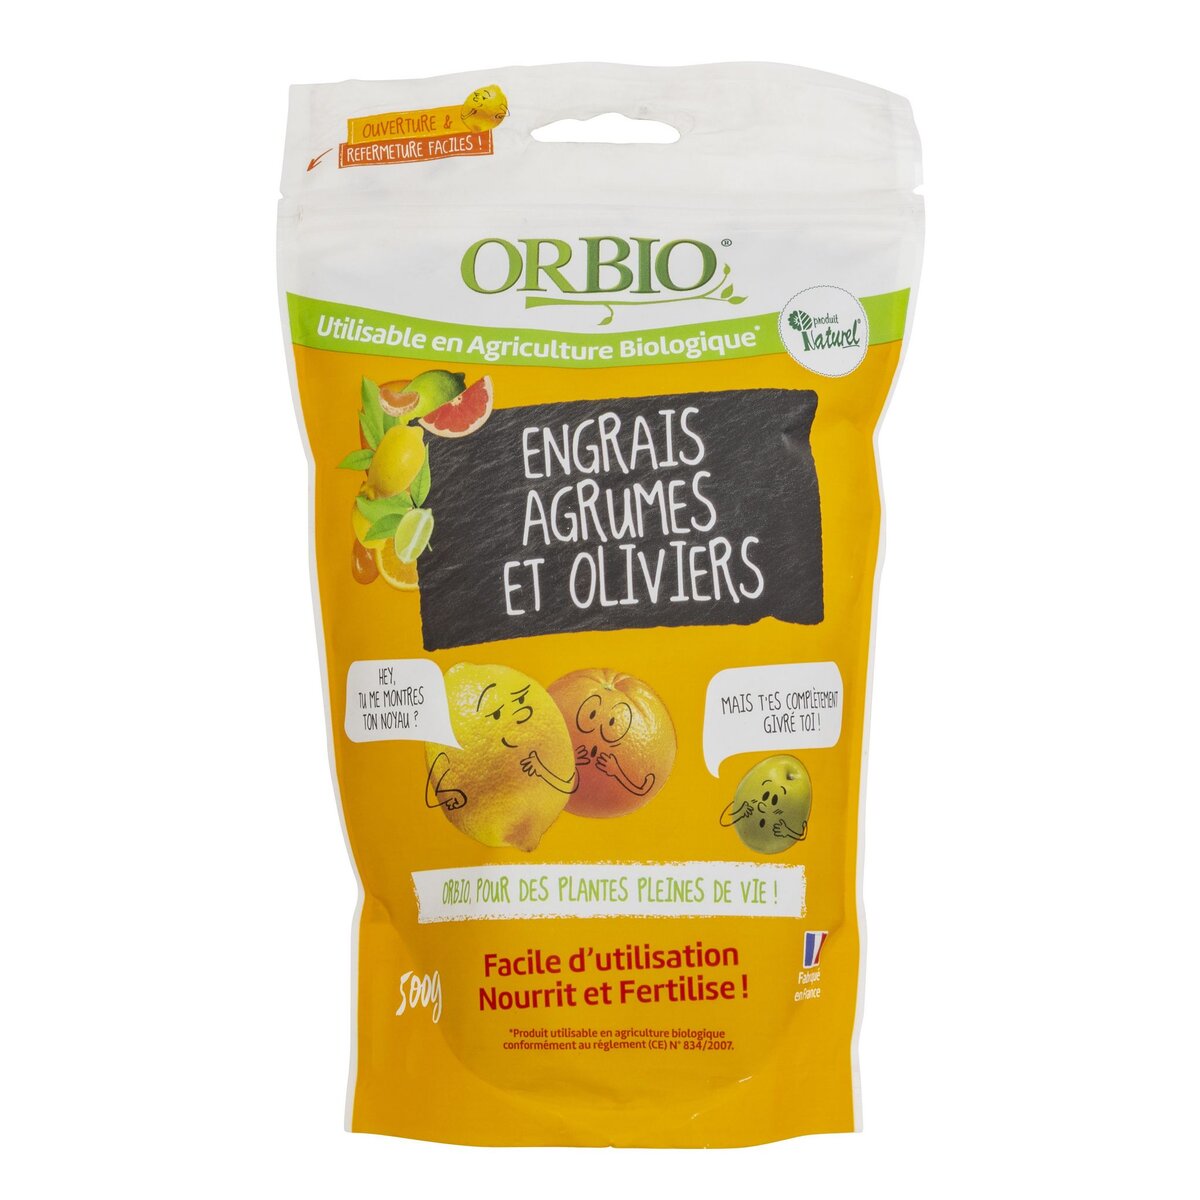 ORBIO Engrais agrumes-oliviers 500g OrBio